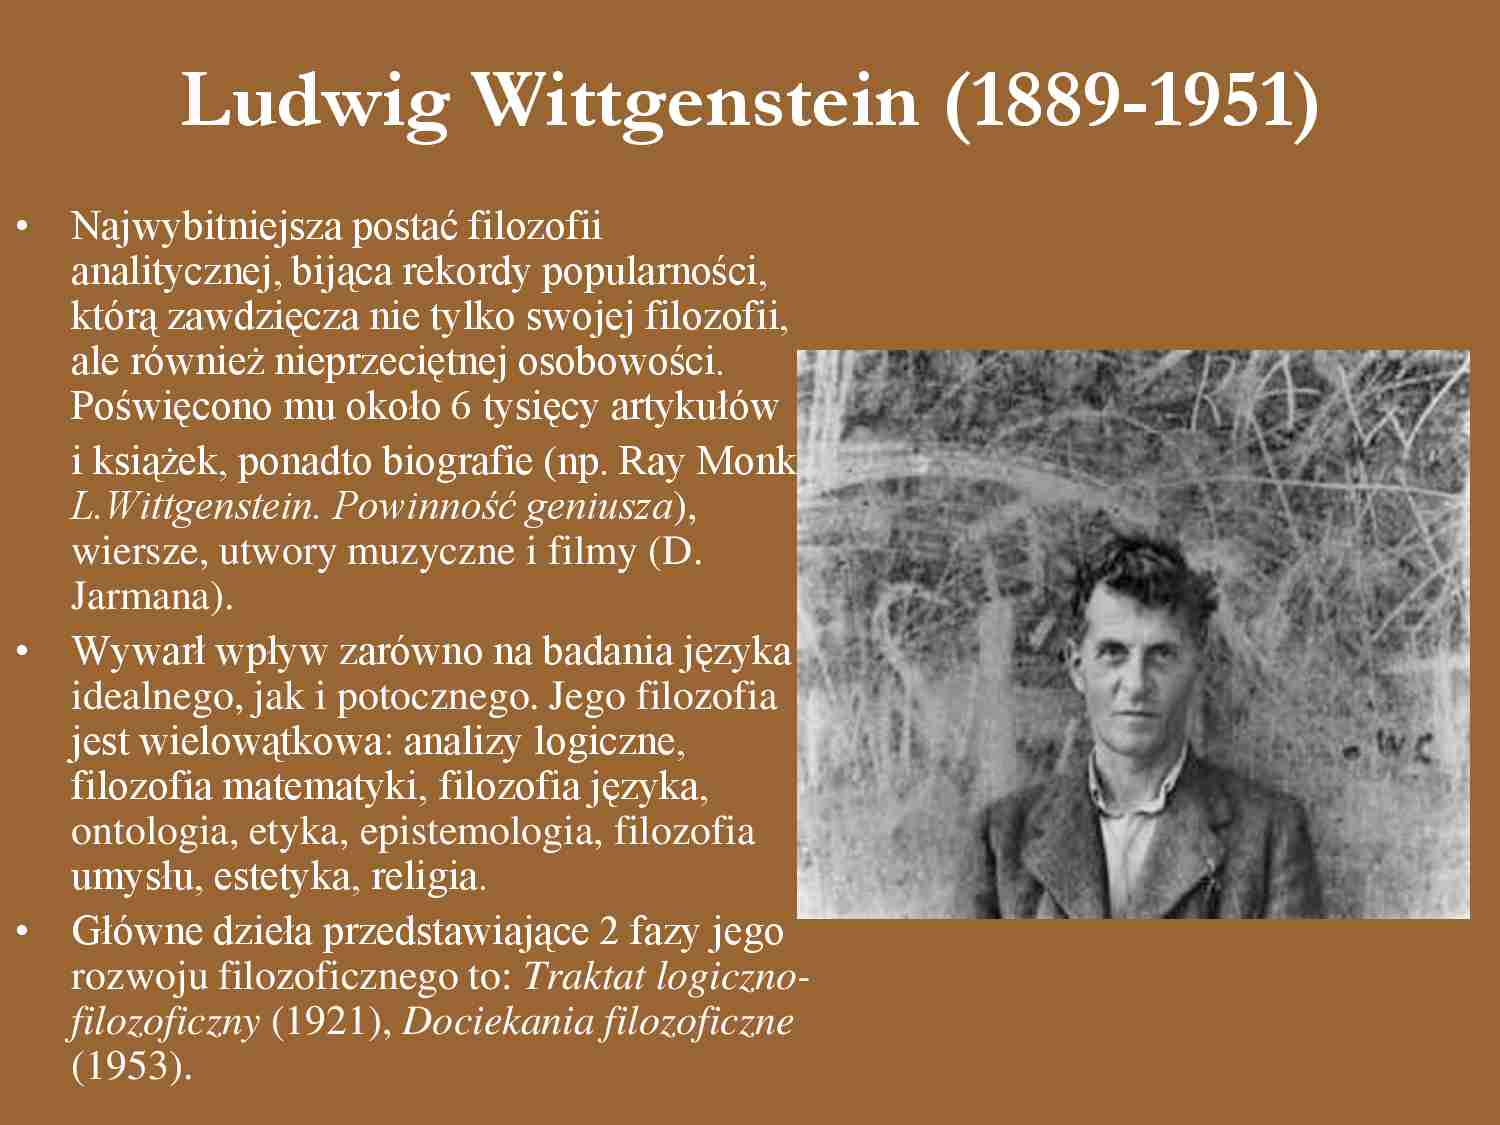 Wittgenstein-opracowanie - strona 1